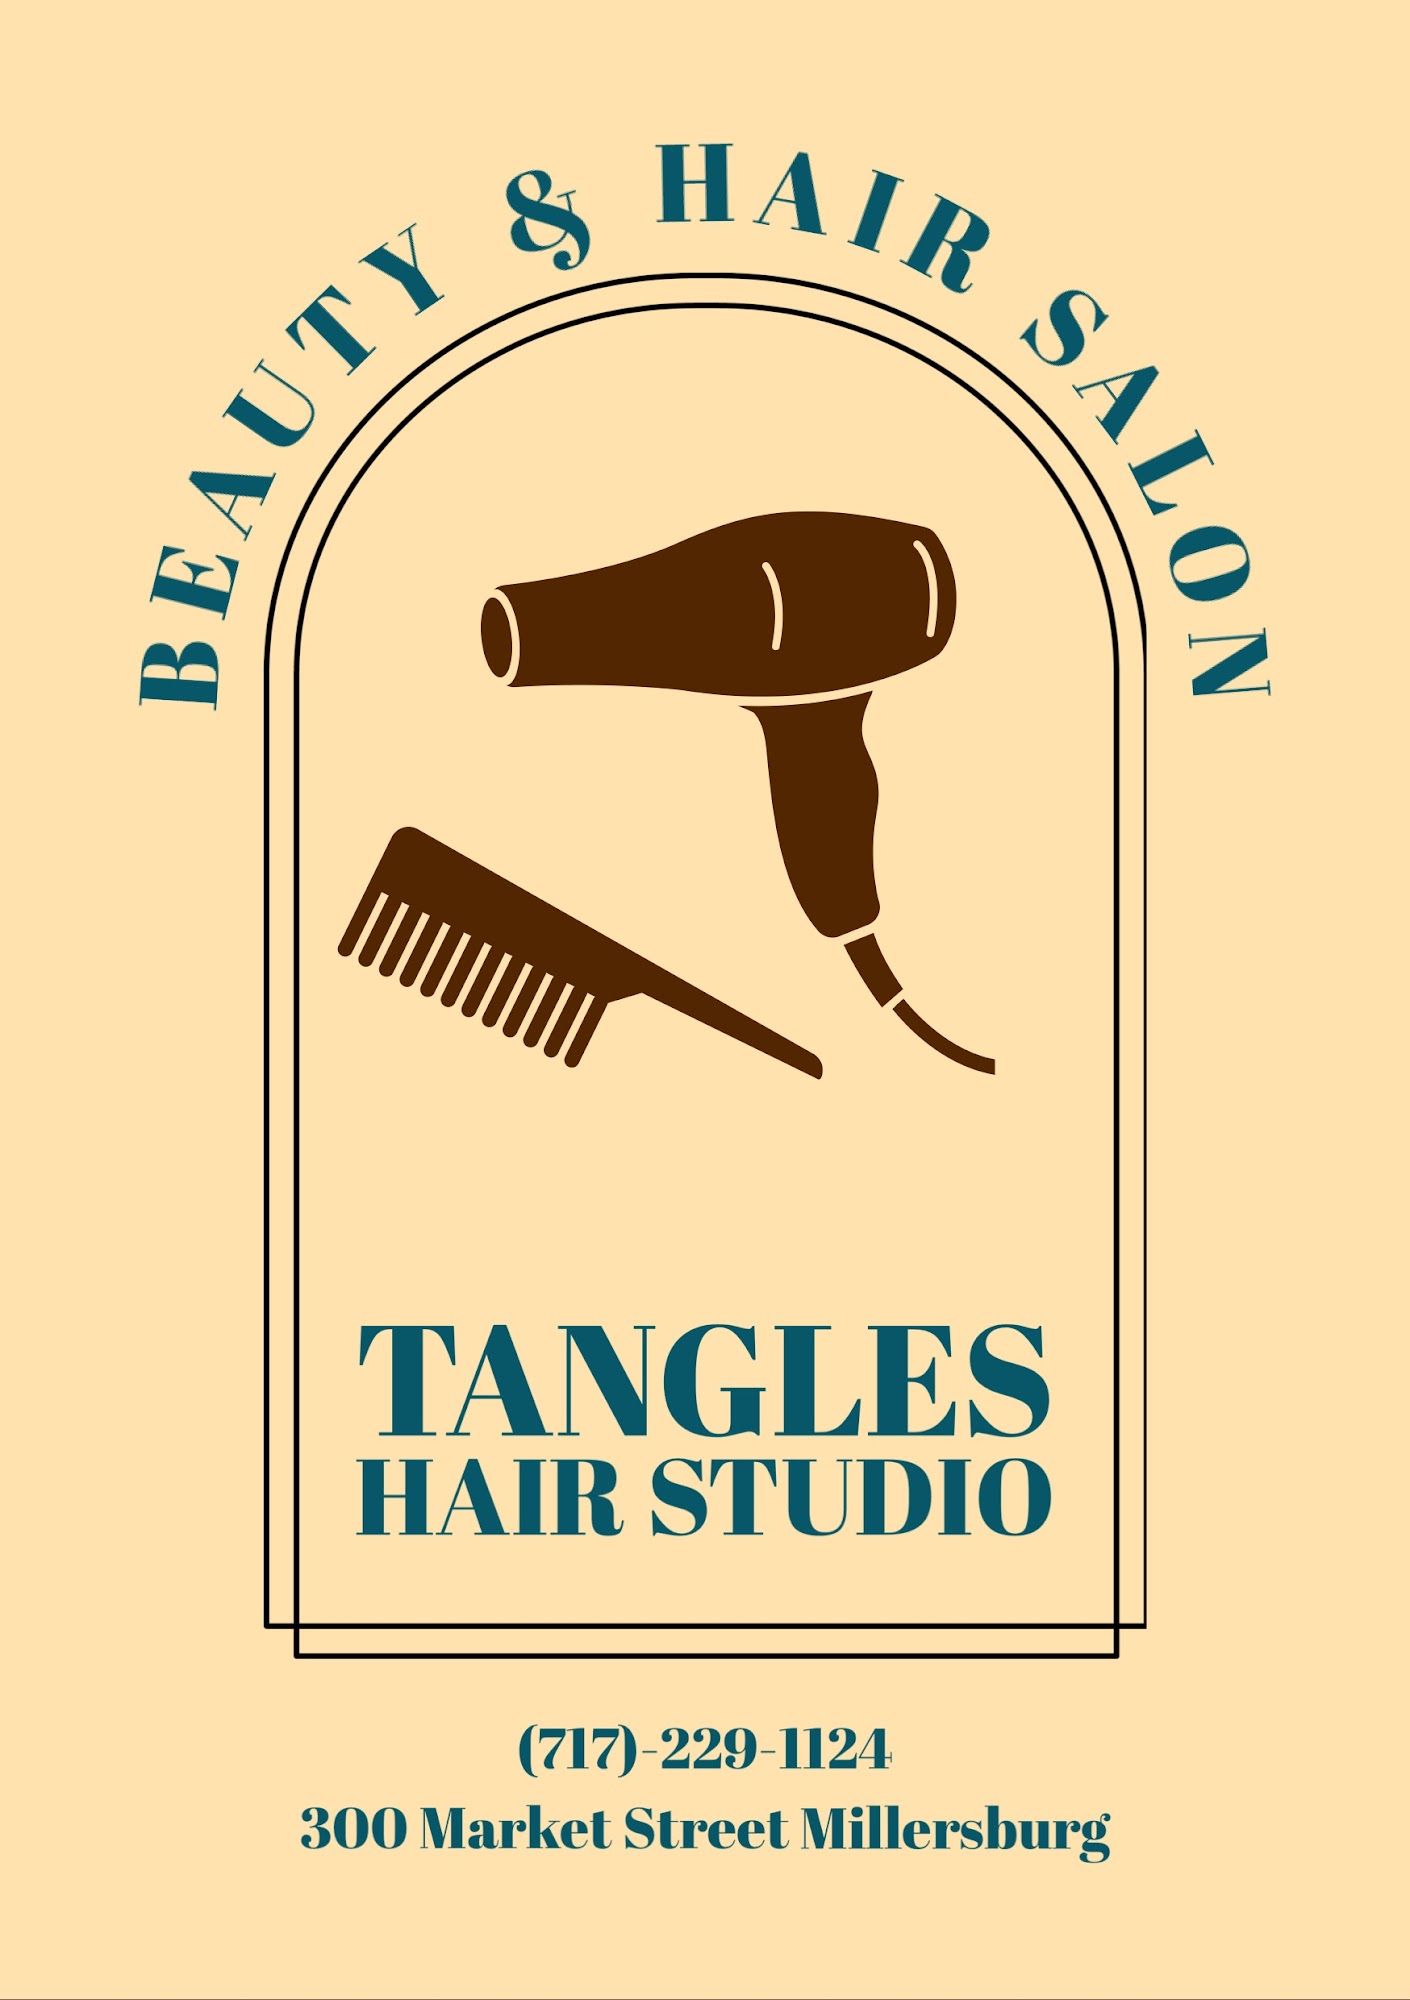 Tangles Hair Studio 300 Market St, Millersburg Pennsylvania 17061